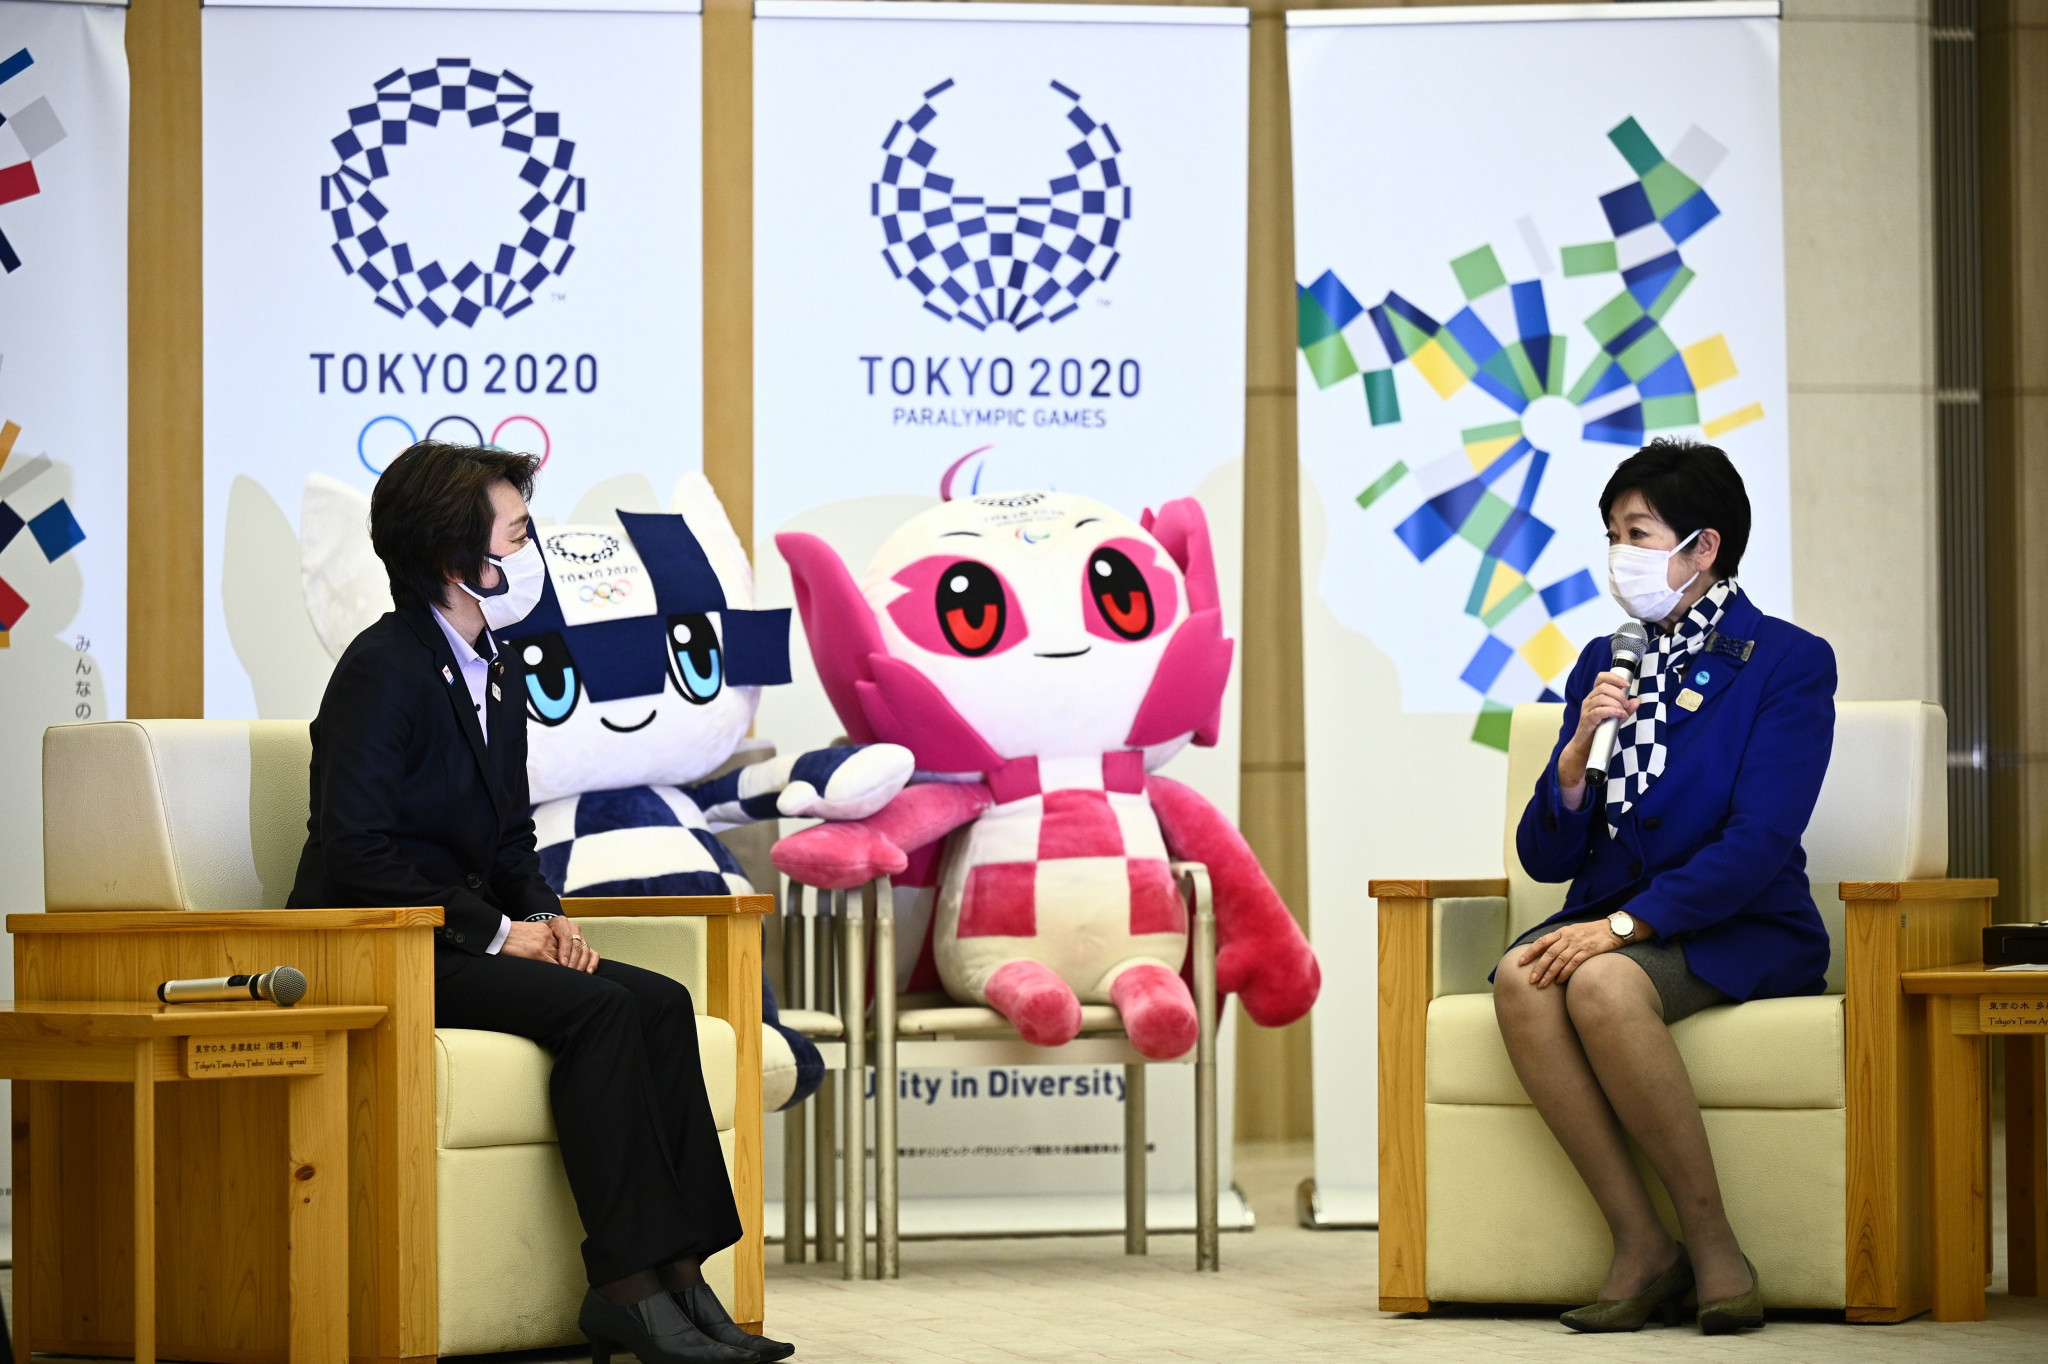 New Tokyo 2020 President Seiko Hashimoto, left, has already met with Tokyo Governor Yuriko Koike ©Getty Images